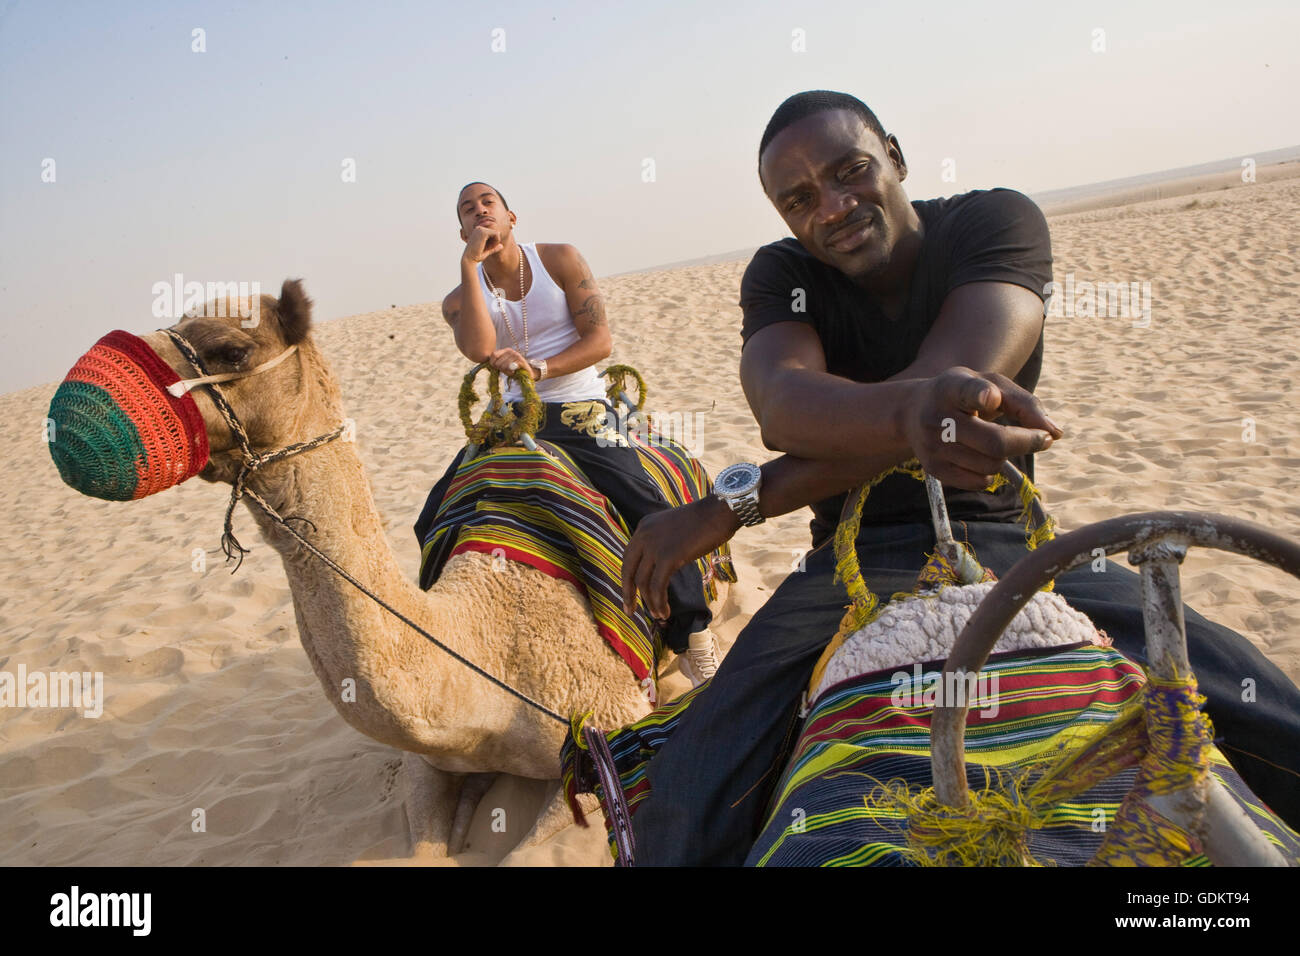 Ludacris and Akon sittin on camels in the desert, November 2007, Dubai, UAE. Stock Photo